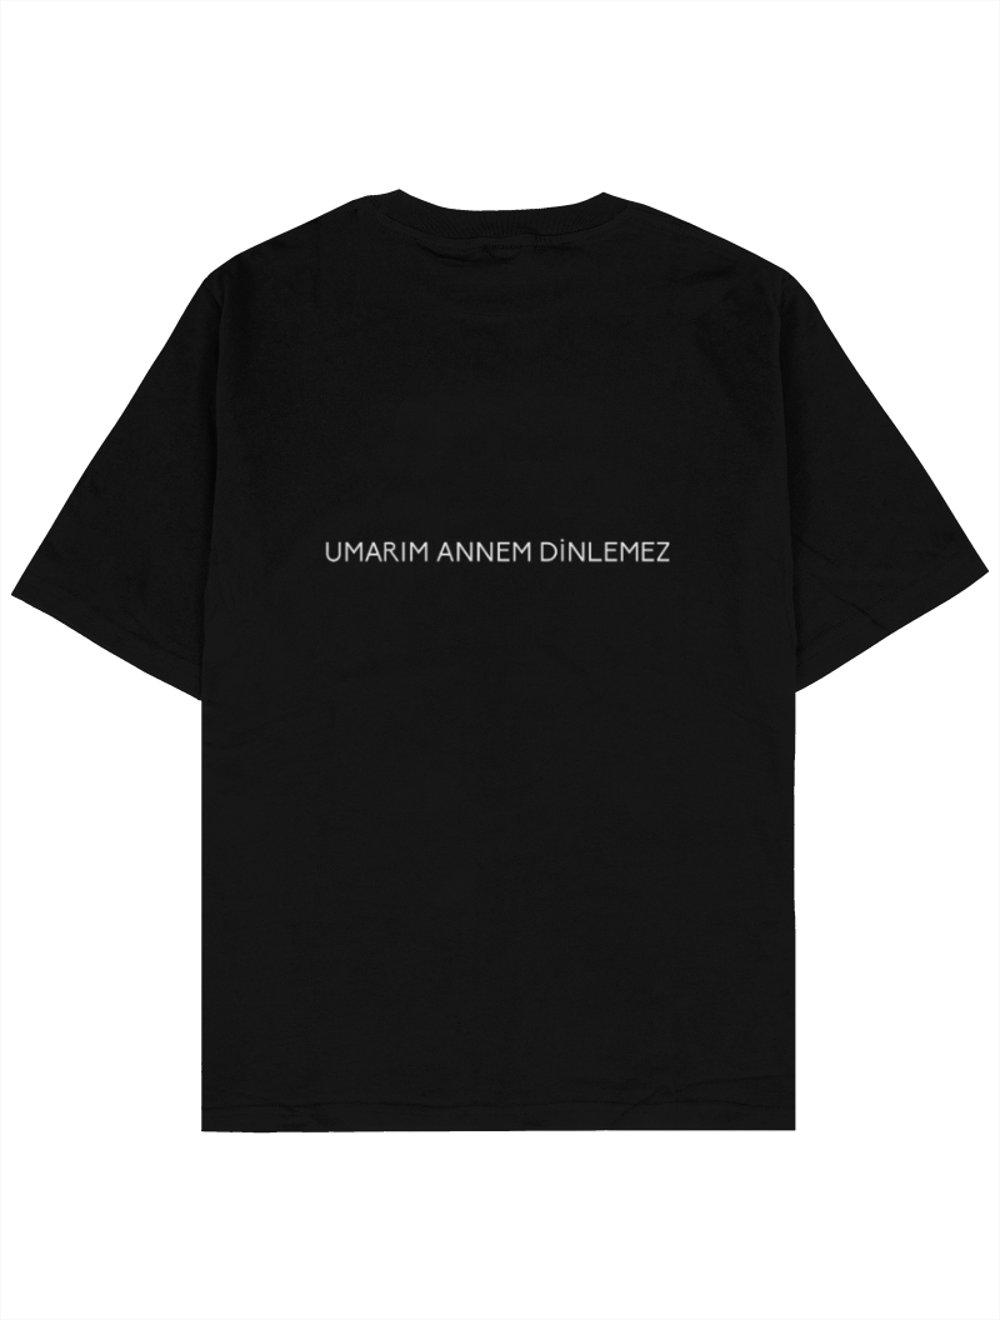 UAD Oversize Tshirt Ön Yazılı